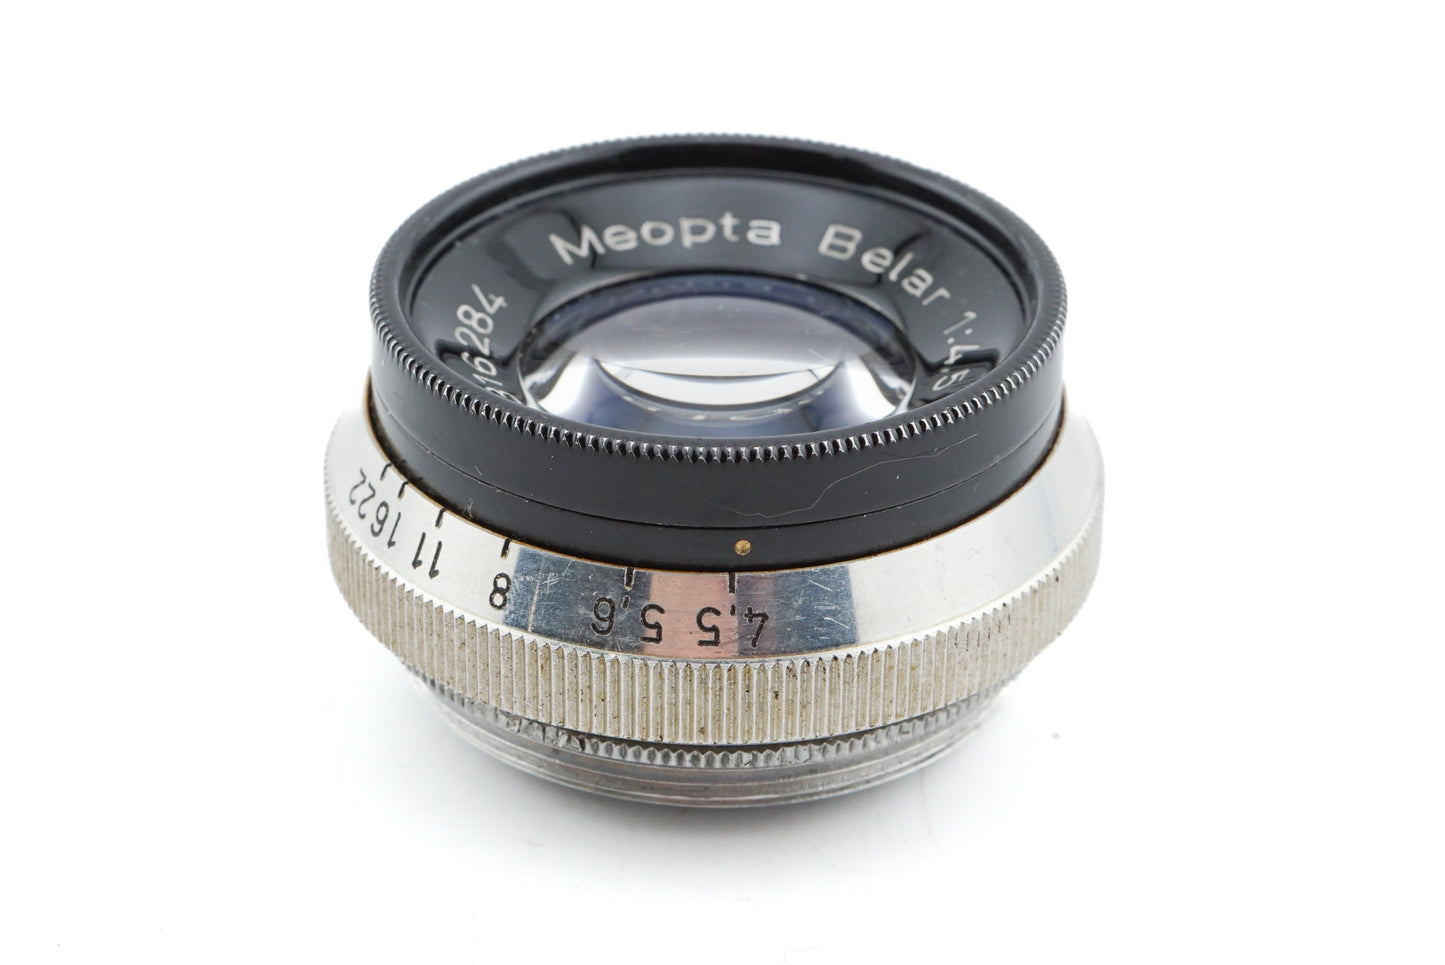 Meopta 105mm f4.5 Belar - Lens